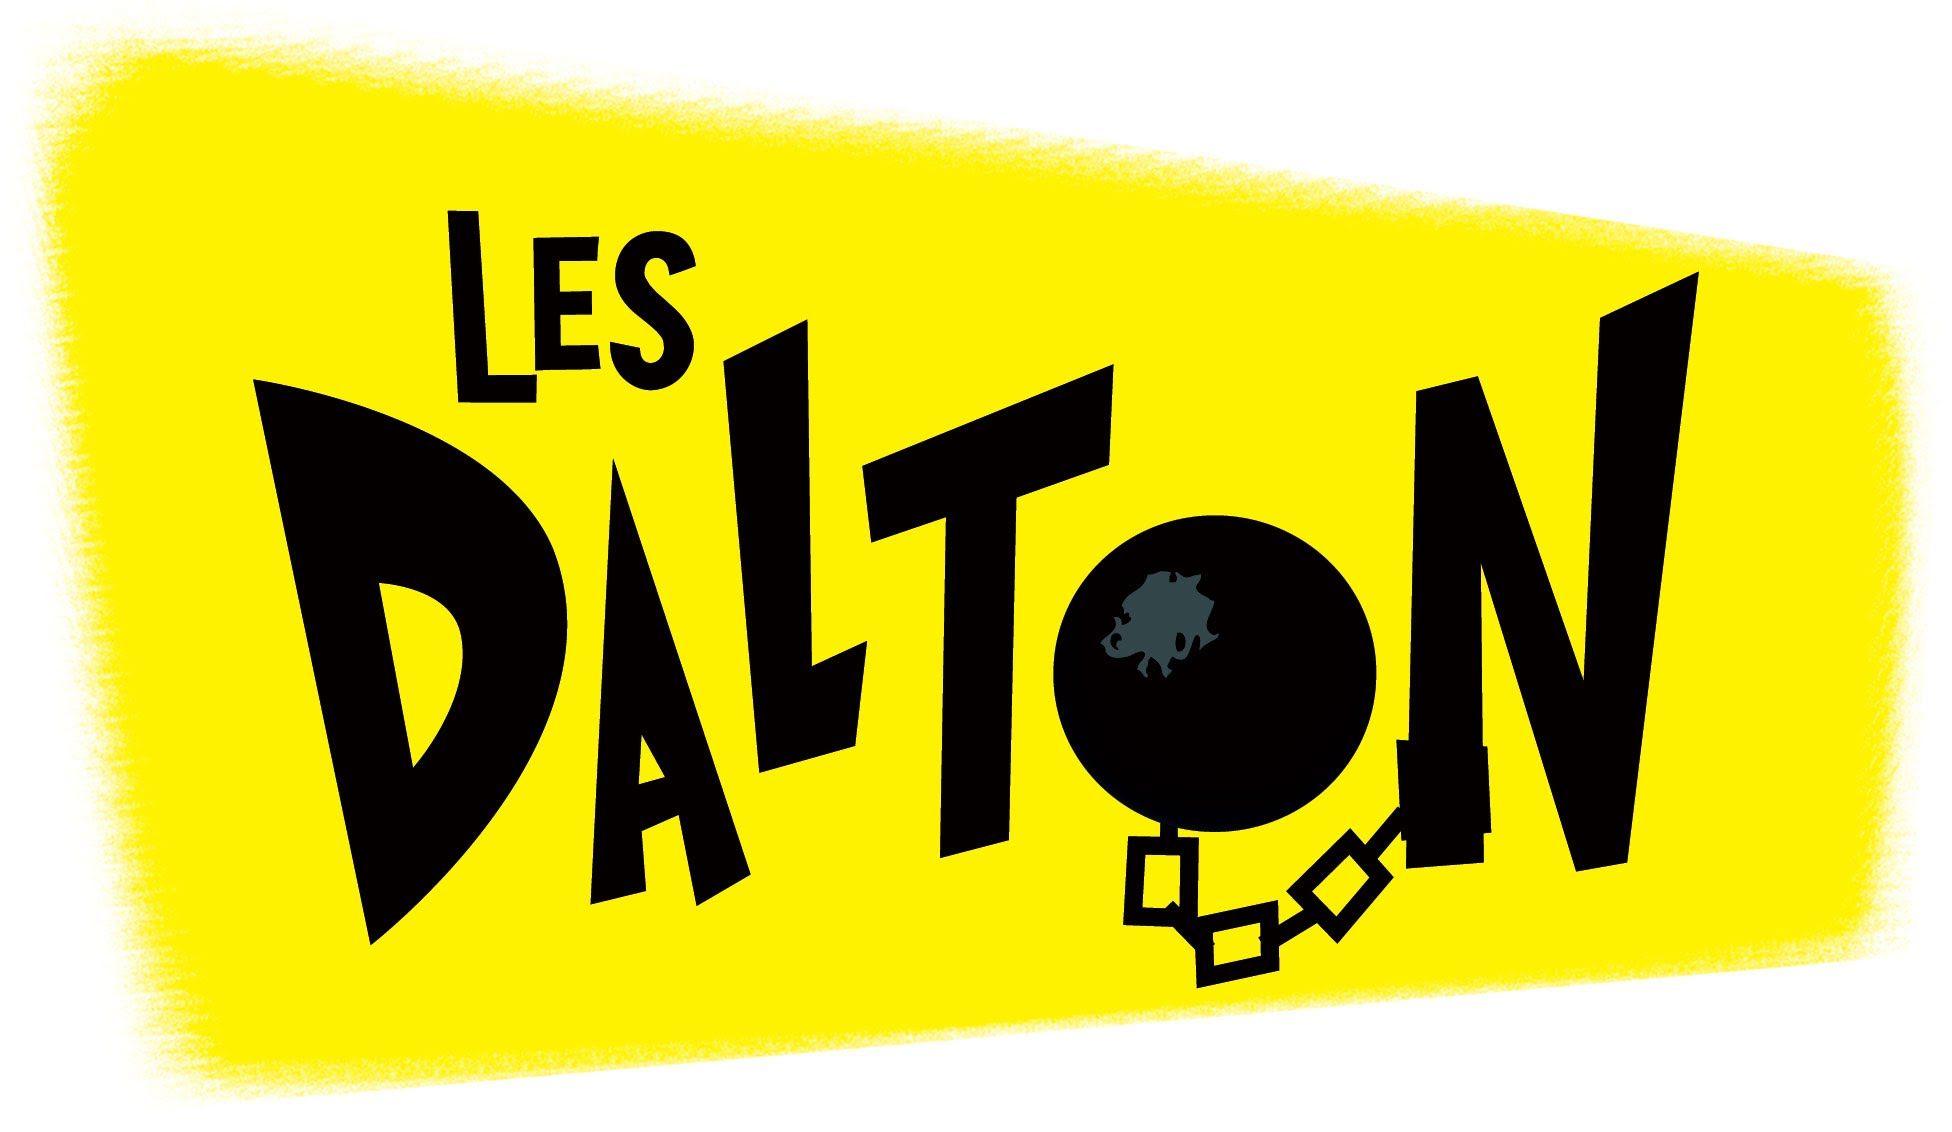 Dalton Logo - File:Les Dalton logo.jpg - Wikimedia Commons